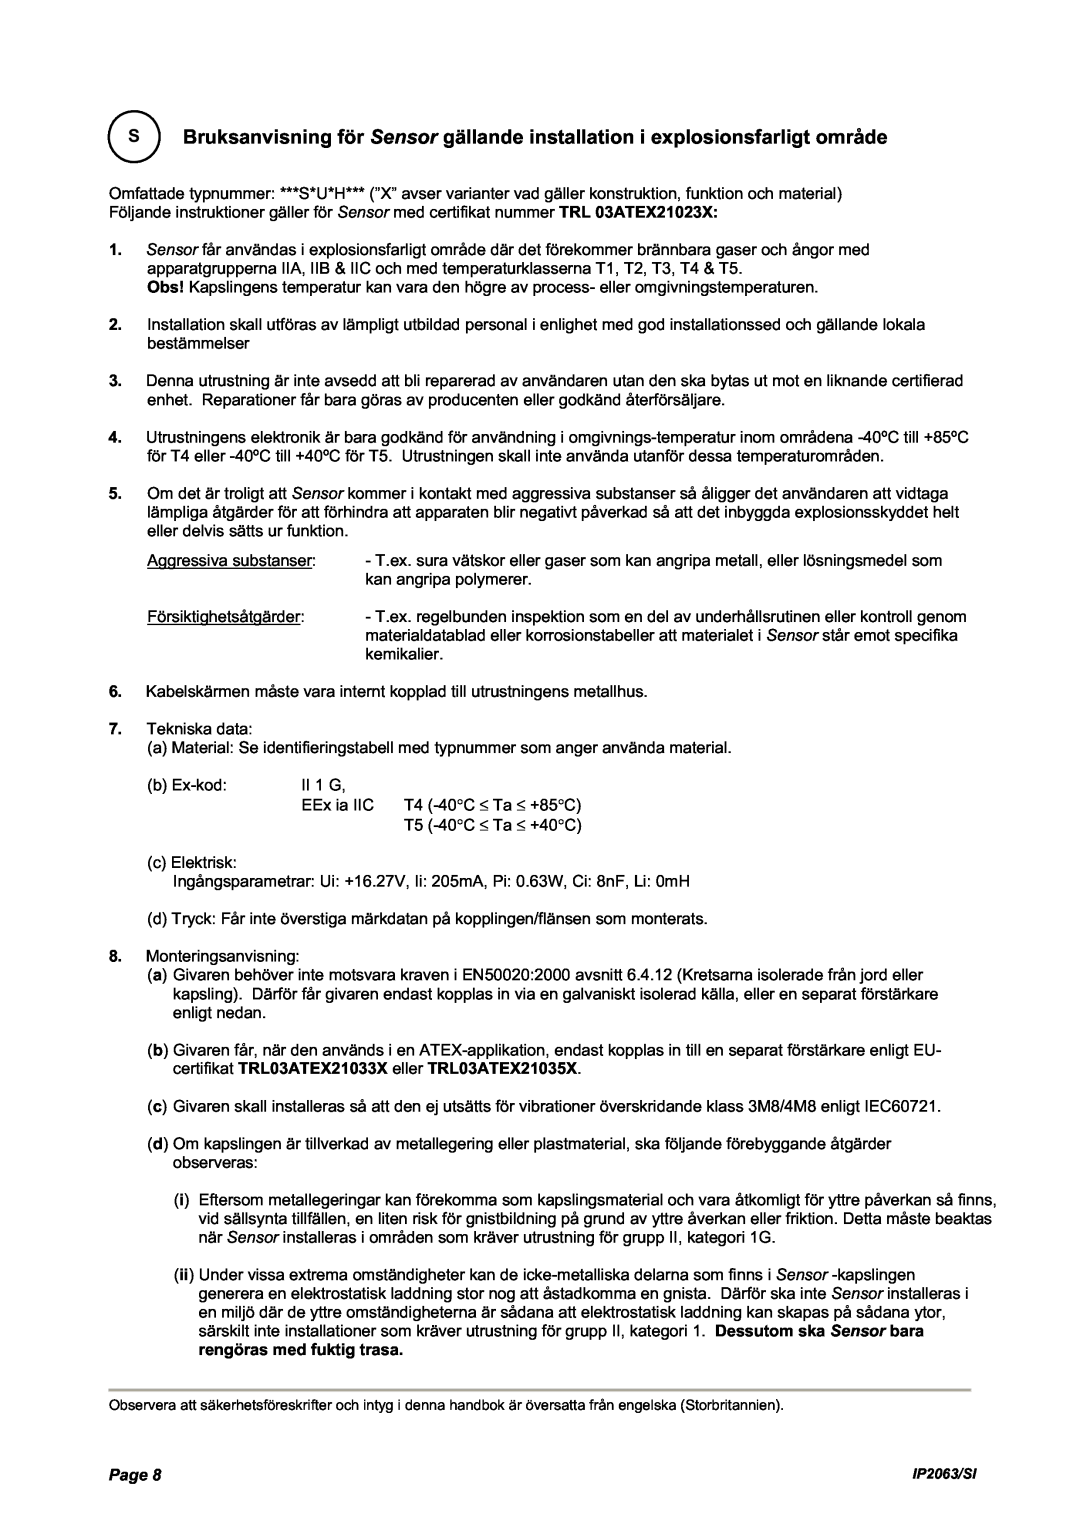 Emerson IP2063/SI, Electrosensor and Electropulse Sensors manual Page 